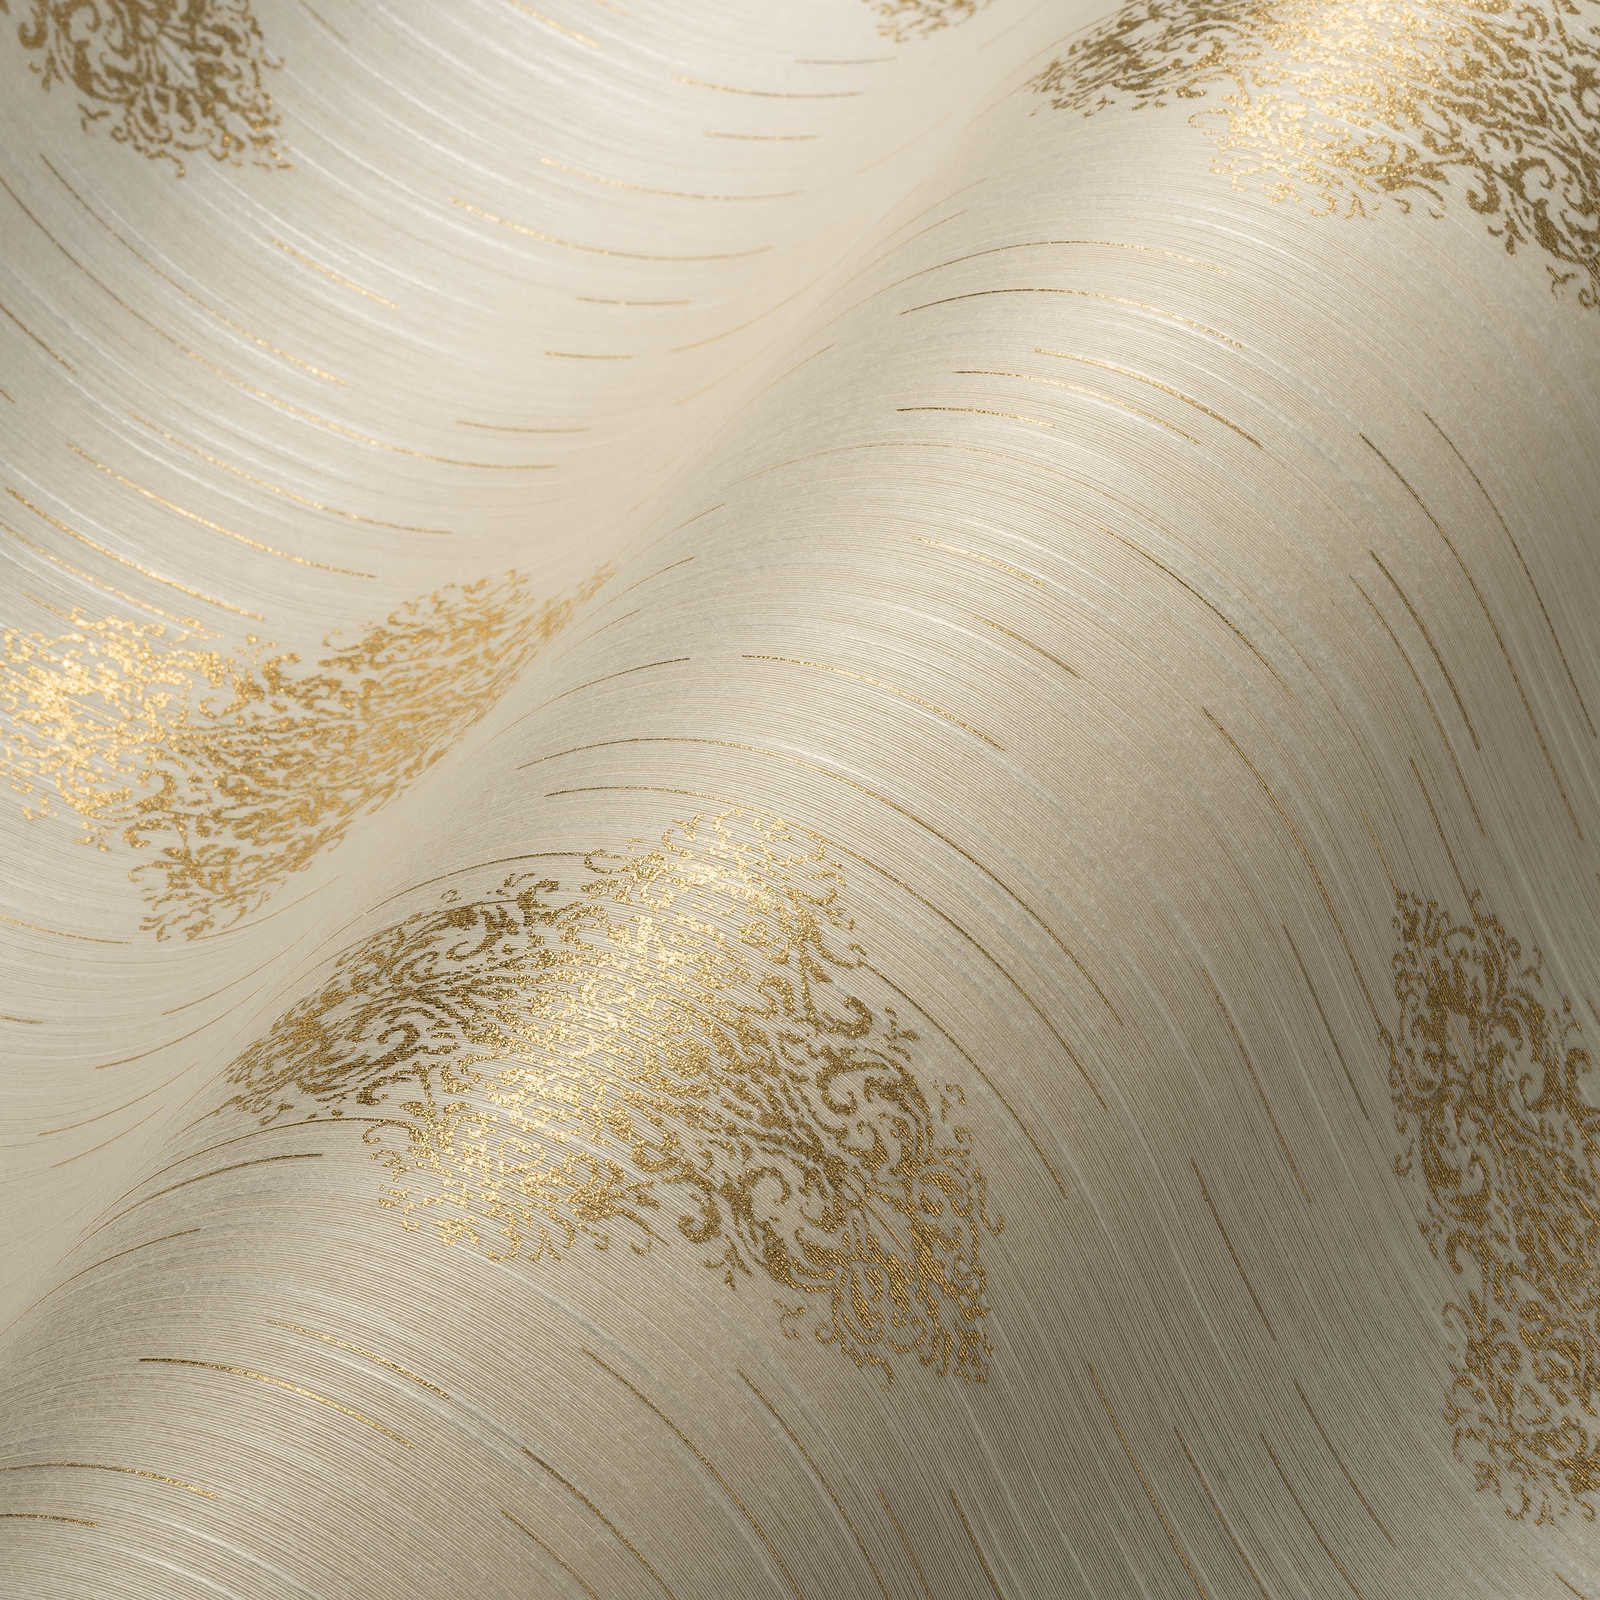             papel pintado de diseño en aspecto usado, efecto metálico - crema, oro
        